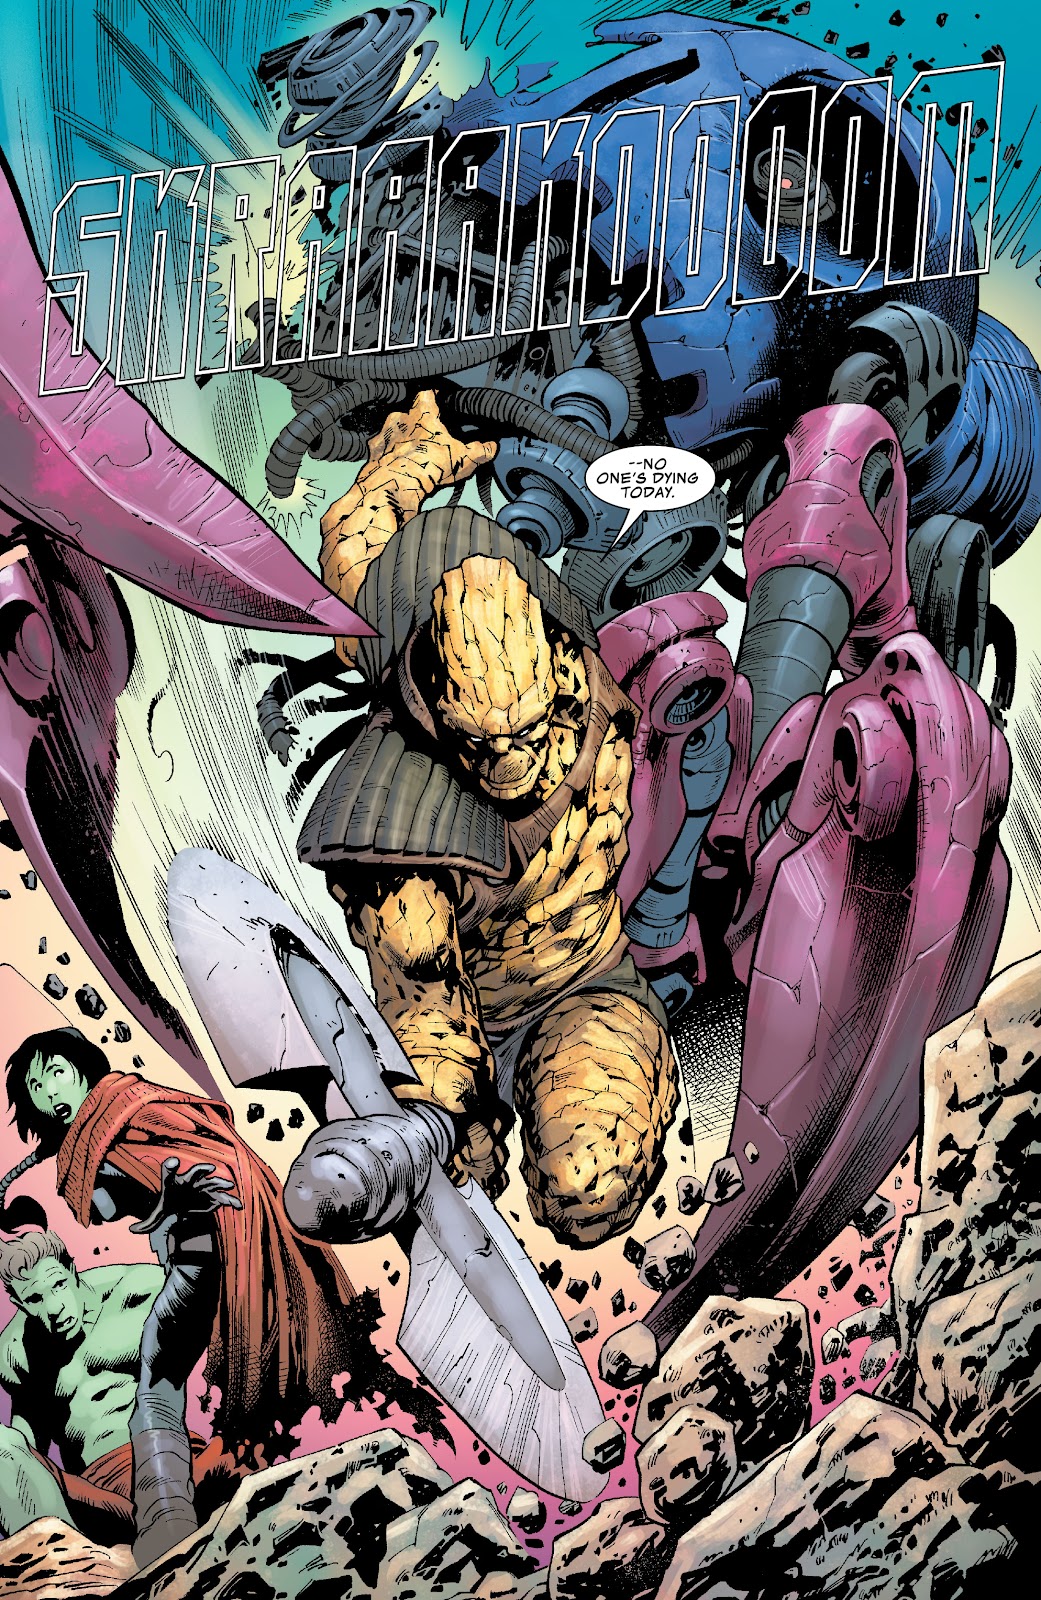 Planet Hulk Worldbreaker issue 3 - Page 8